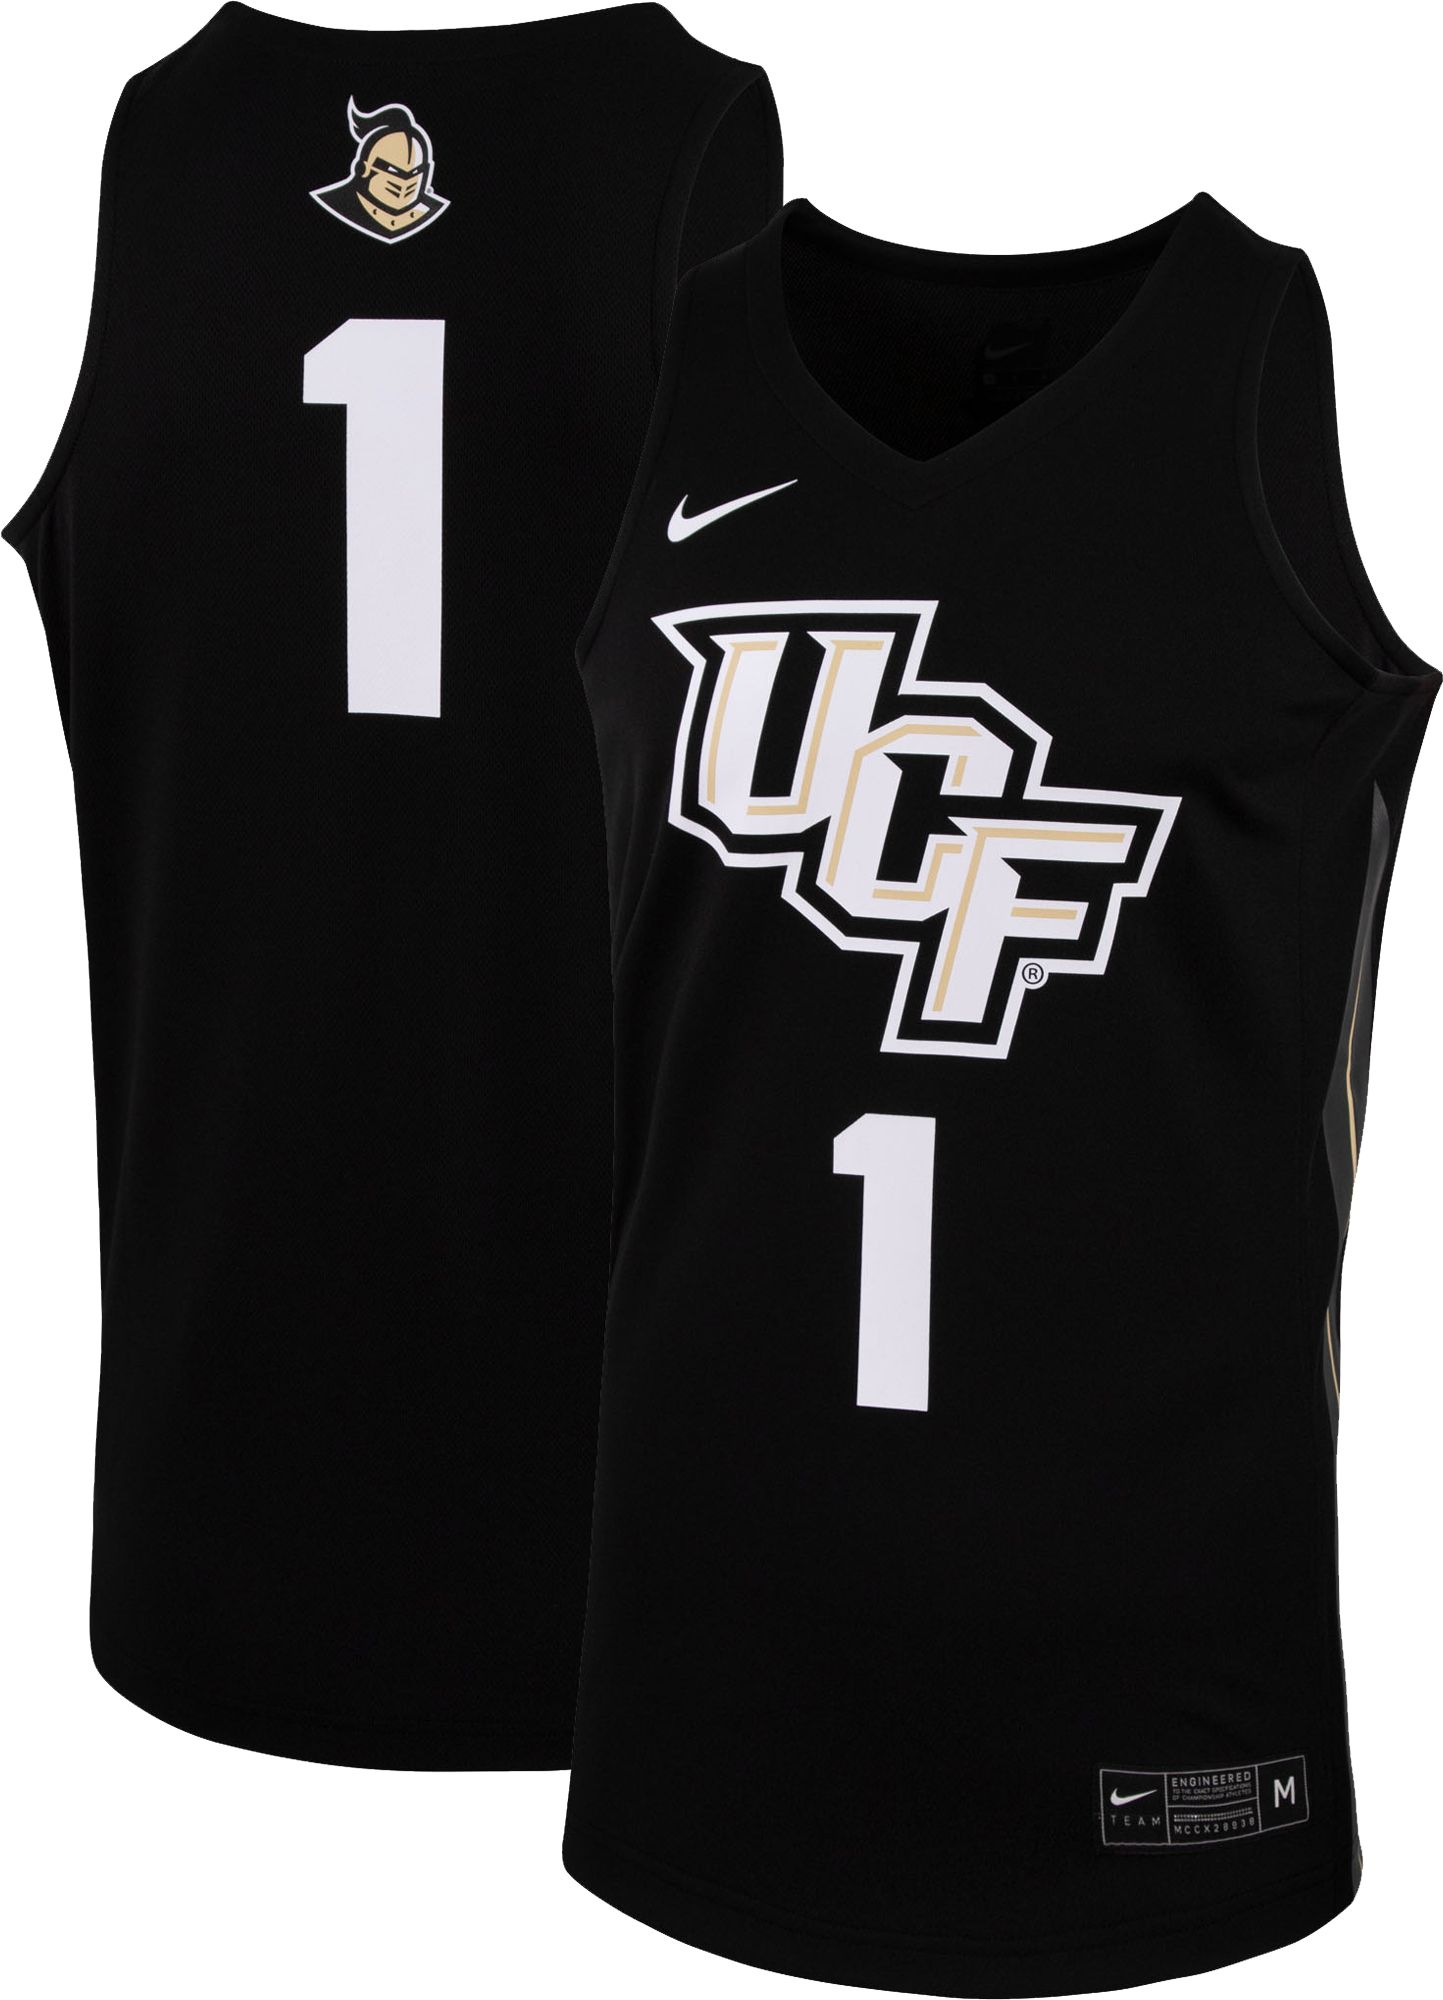 UCF Knights #1 Replica Basketball 